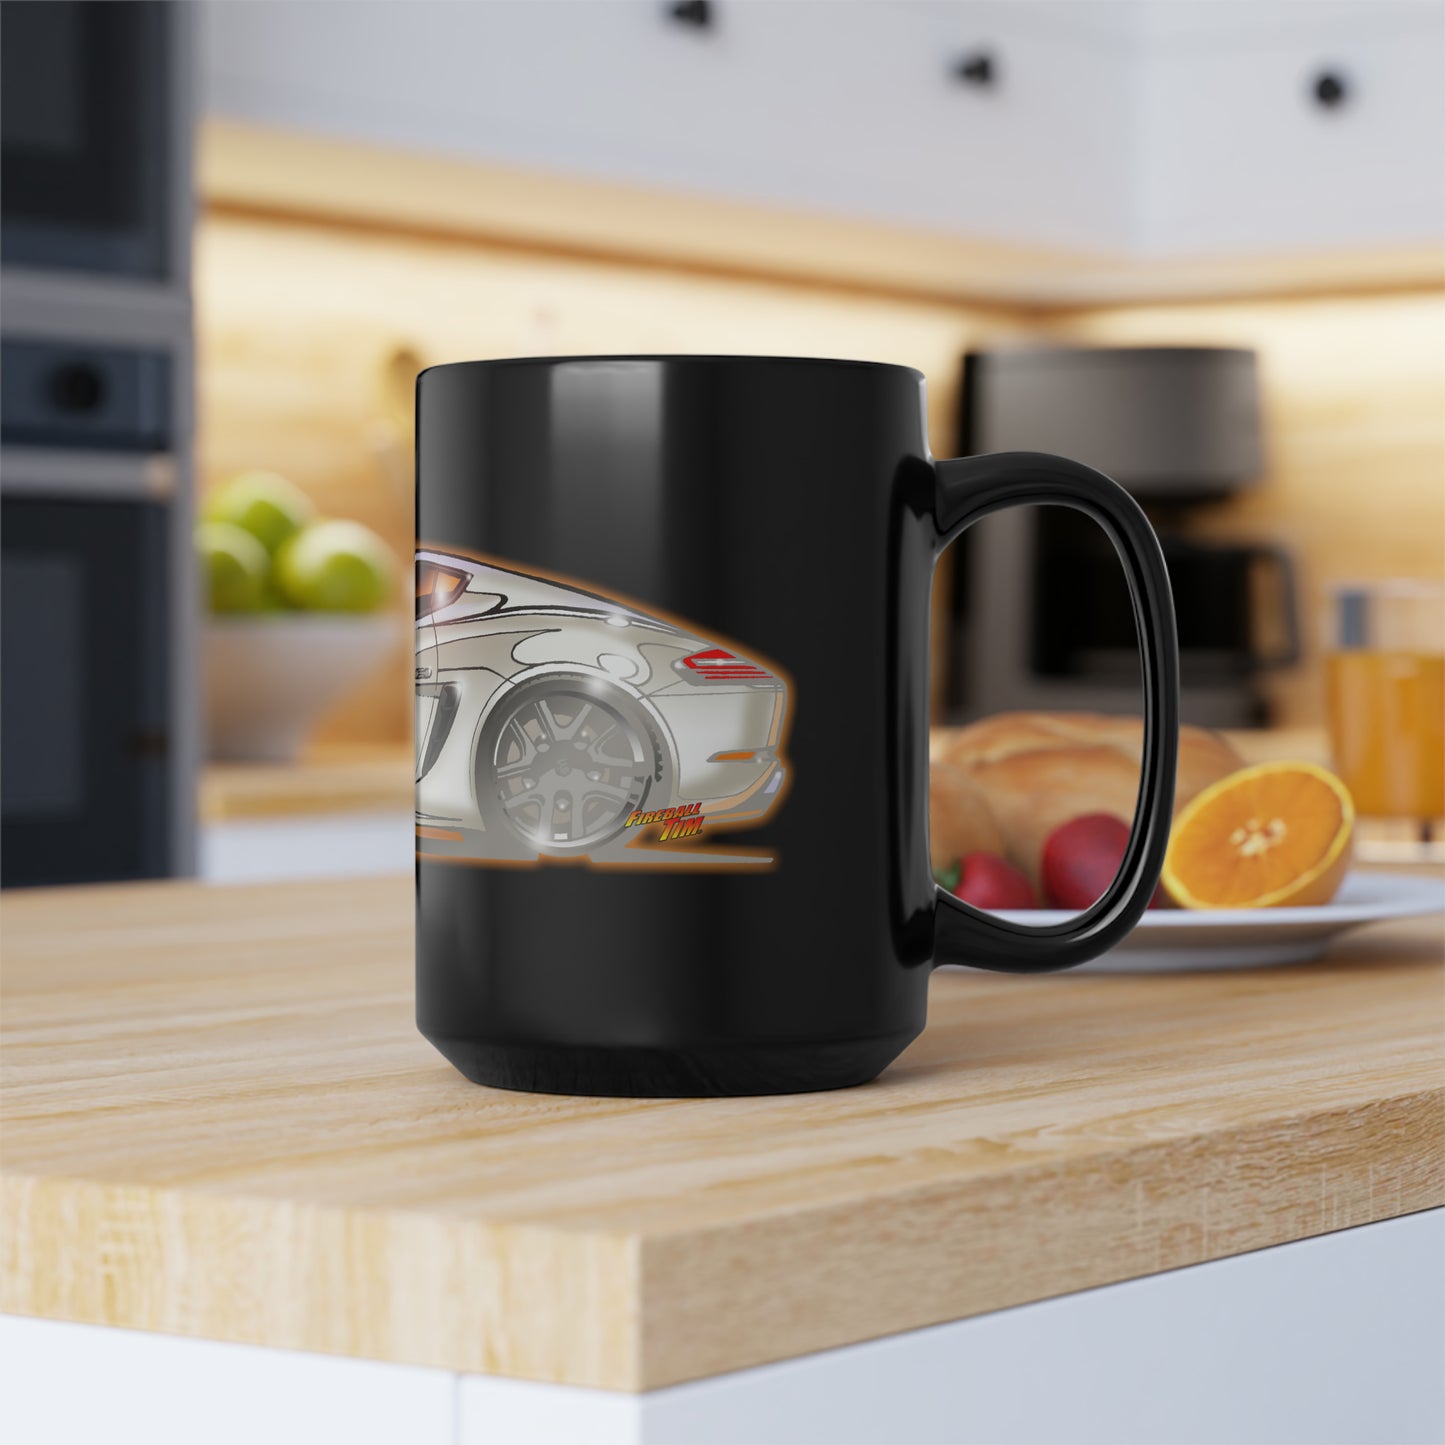 PORSCHE 718 Coffee Mug